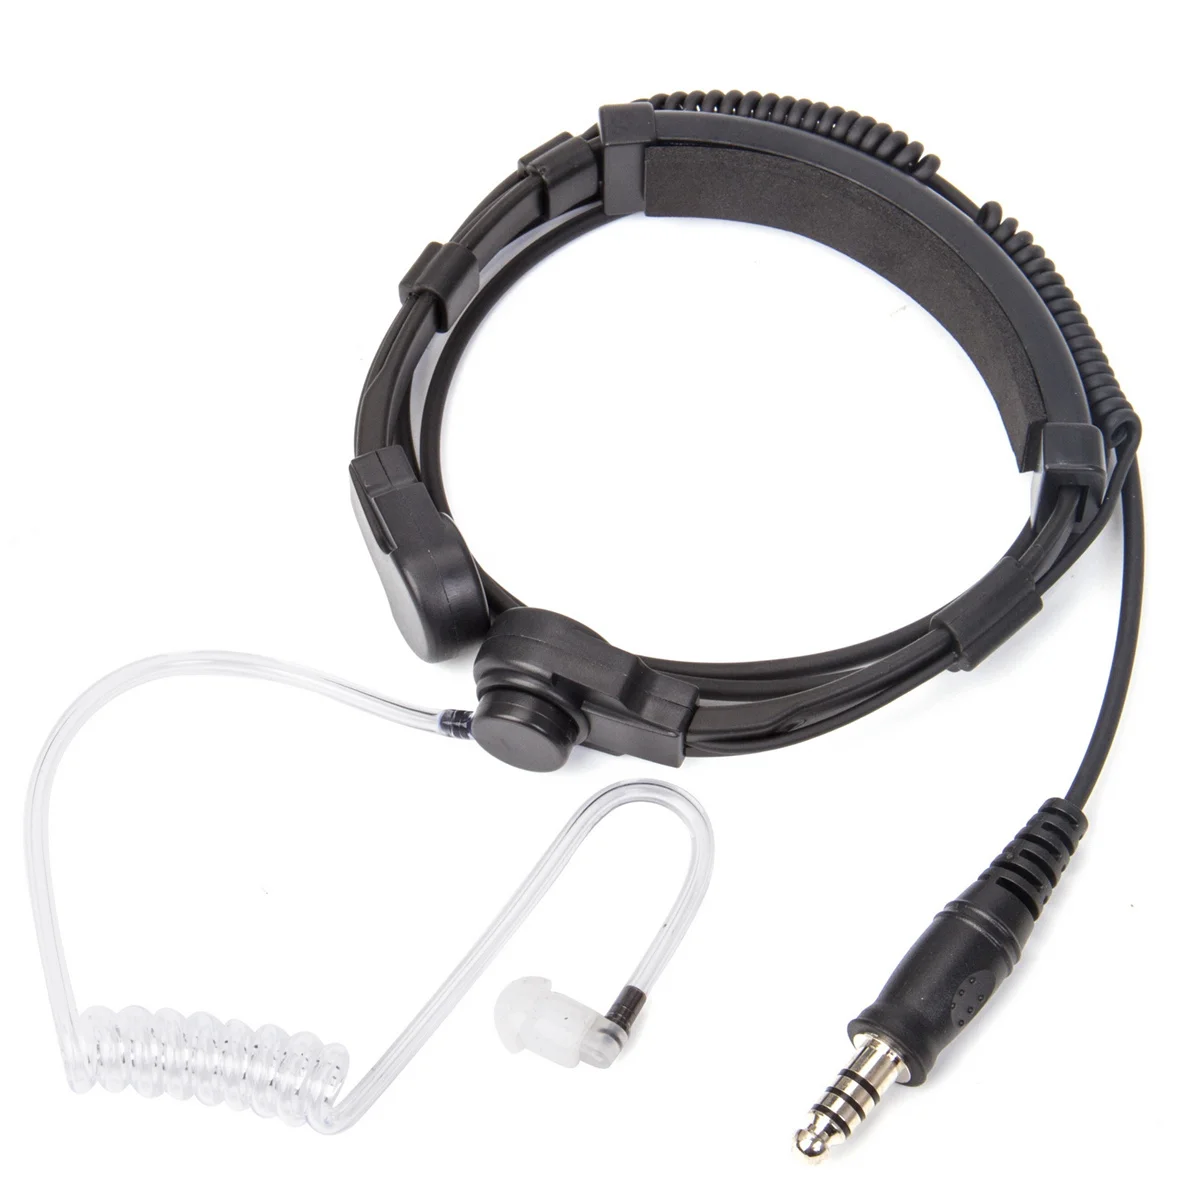 

7.1MM Telescopic Heavy Duty Throat Vibration Earphone Headset Mic Headphone NATO Plug For Walkie Talkie Radio